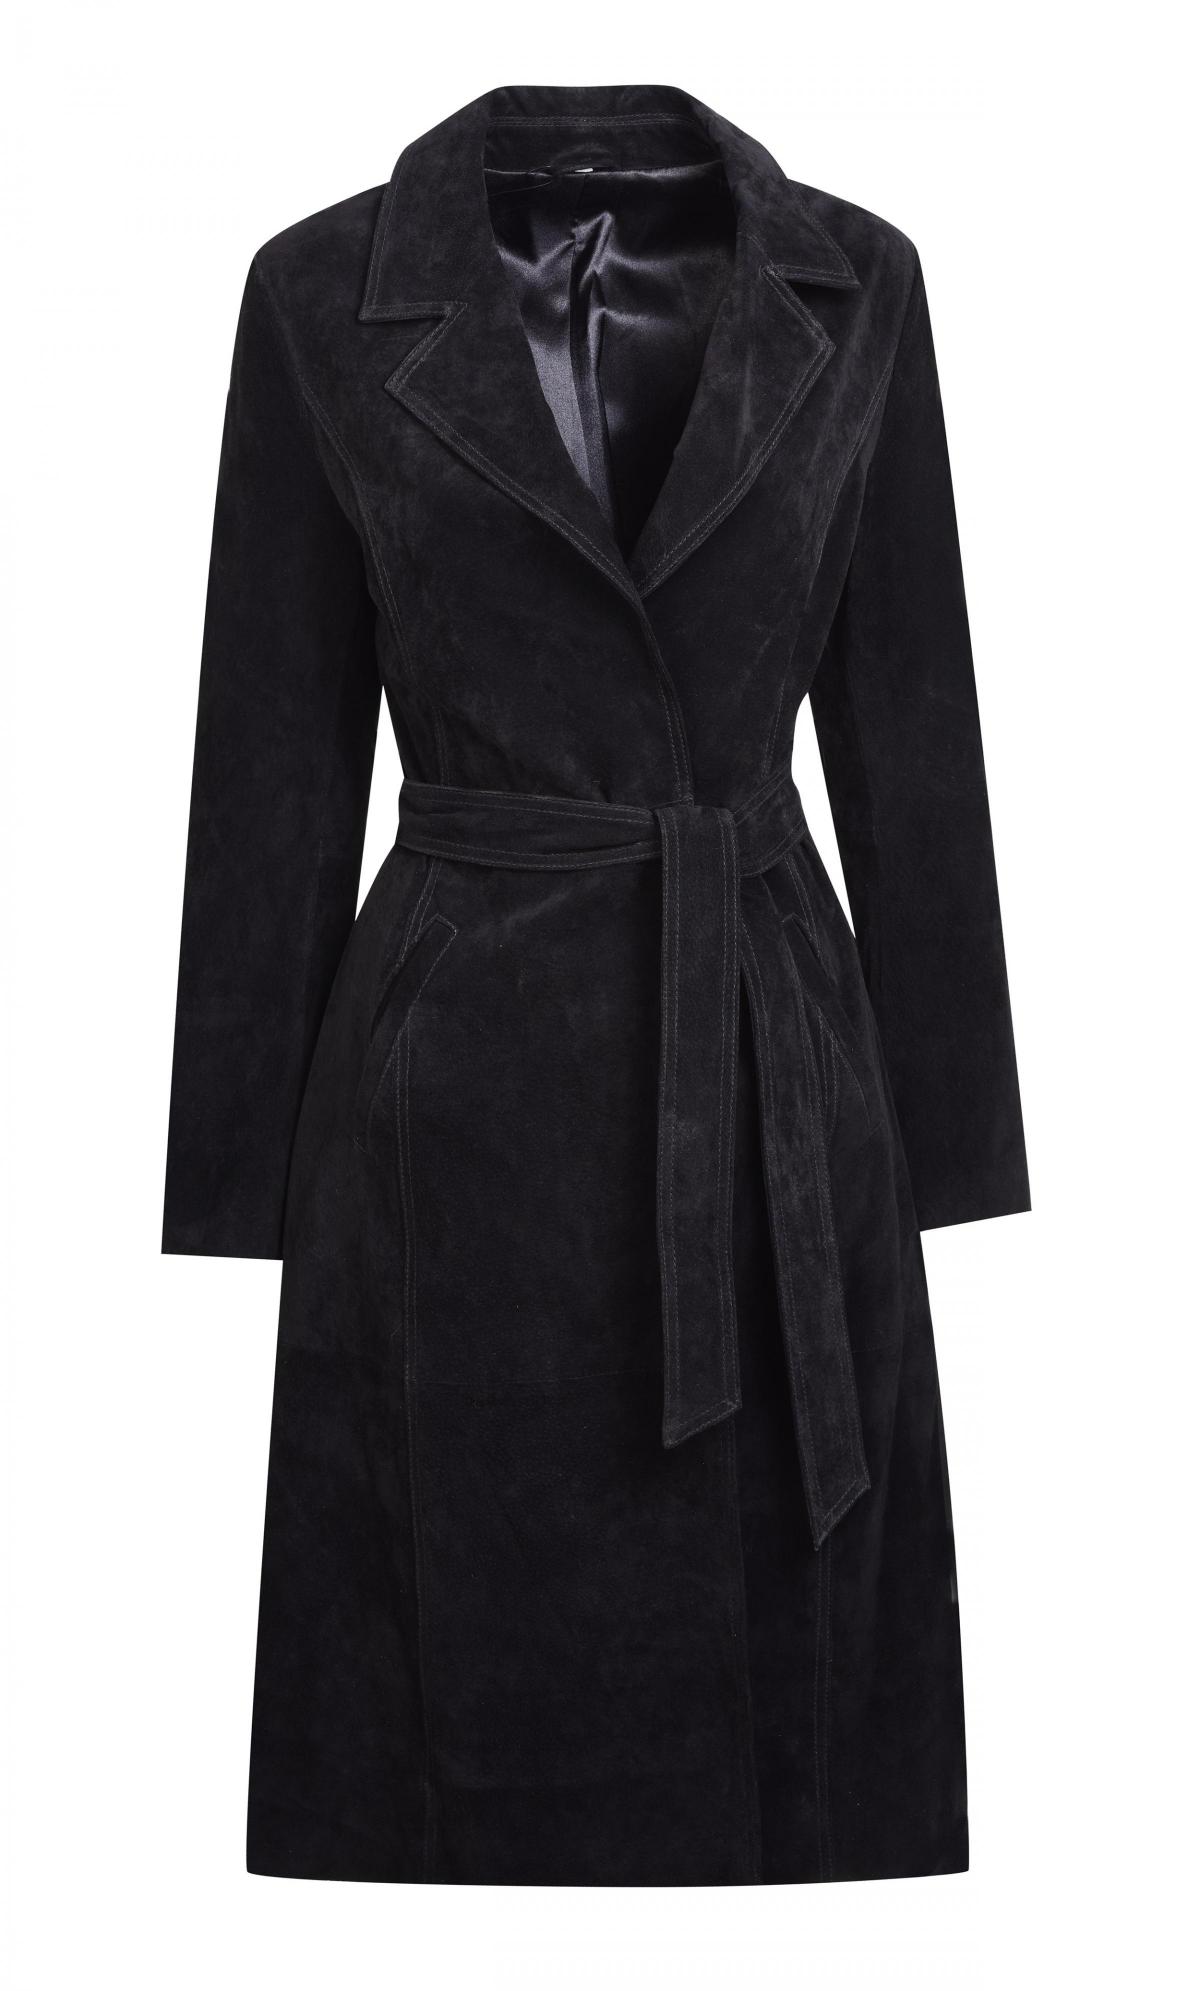 Miss Selfridge, Black Suede Trench Coat, £100